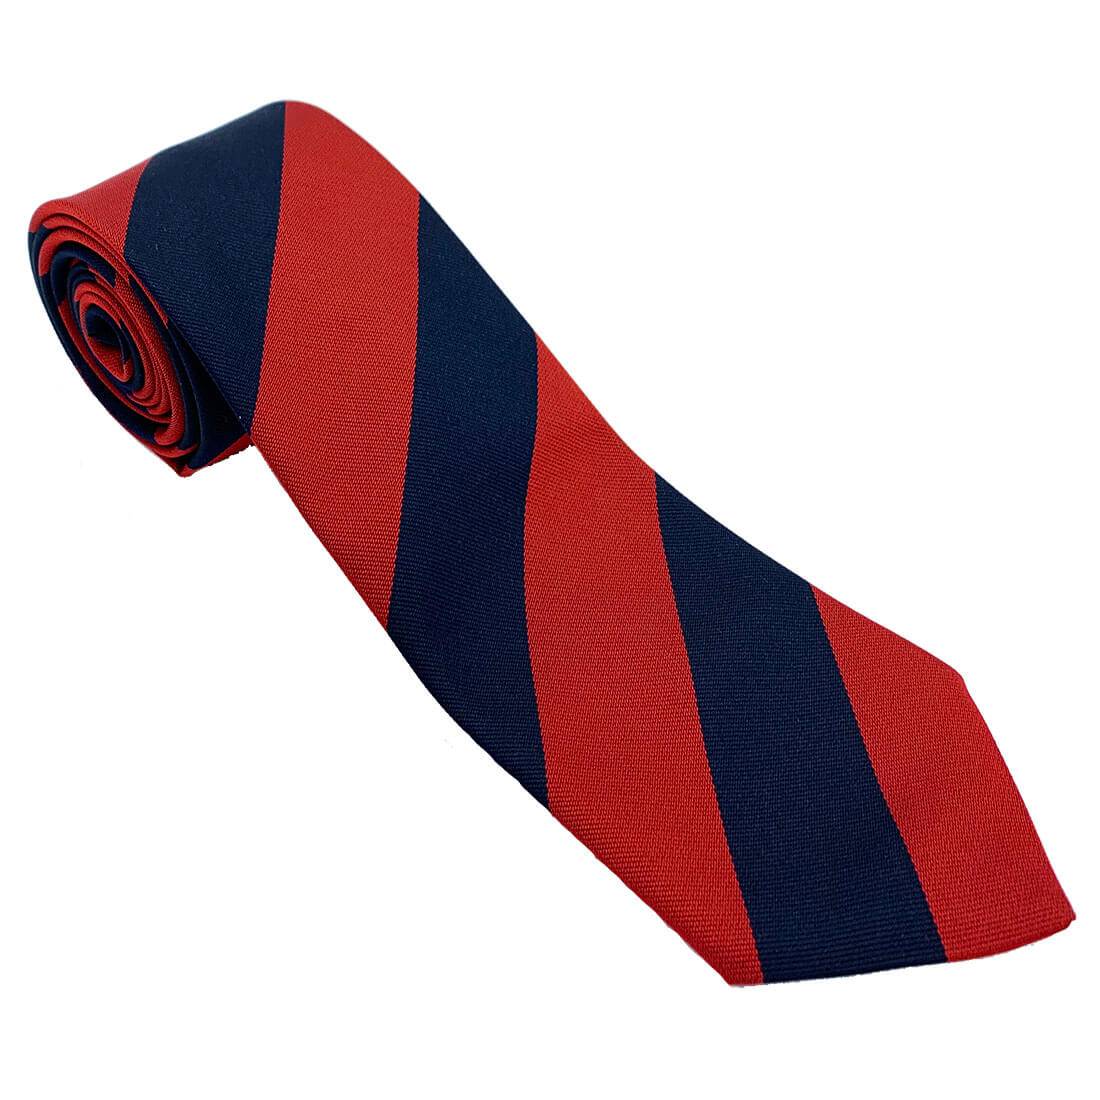 Adjutant Generals Corps Regimental Polyester Tie - John Bull Clothing